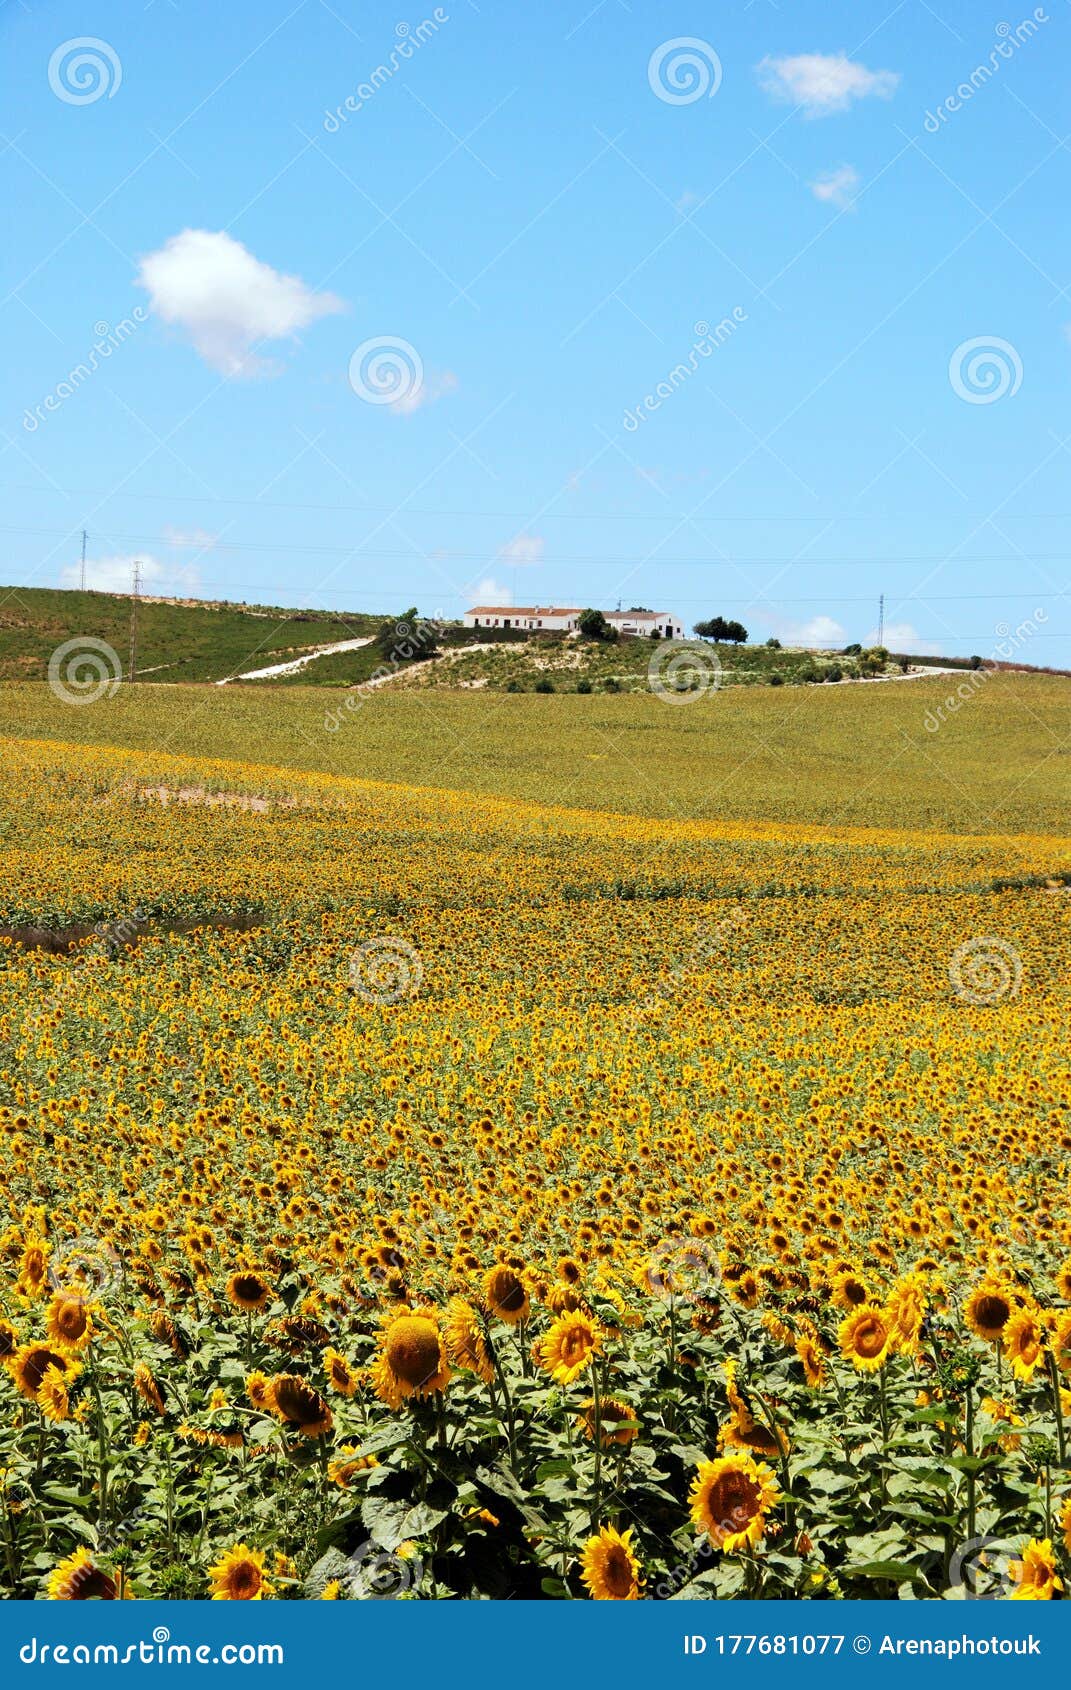 sunflower field and farm, medina sidonia, spain.